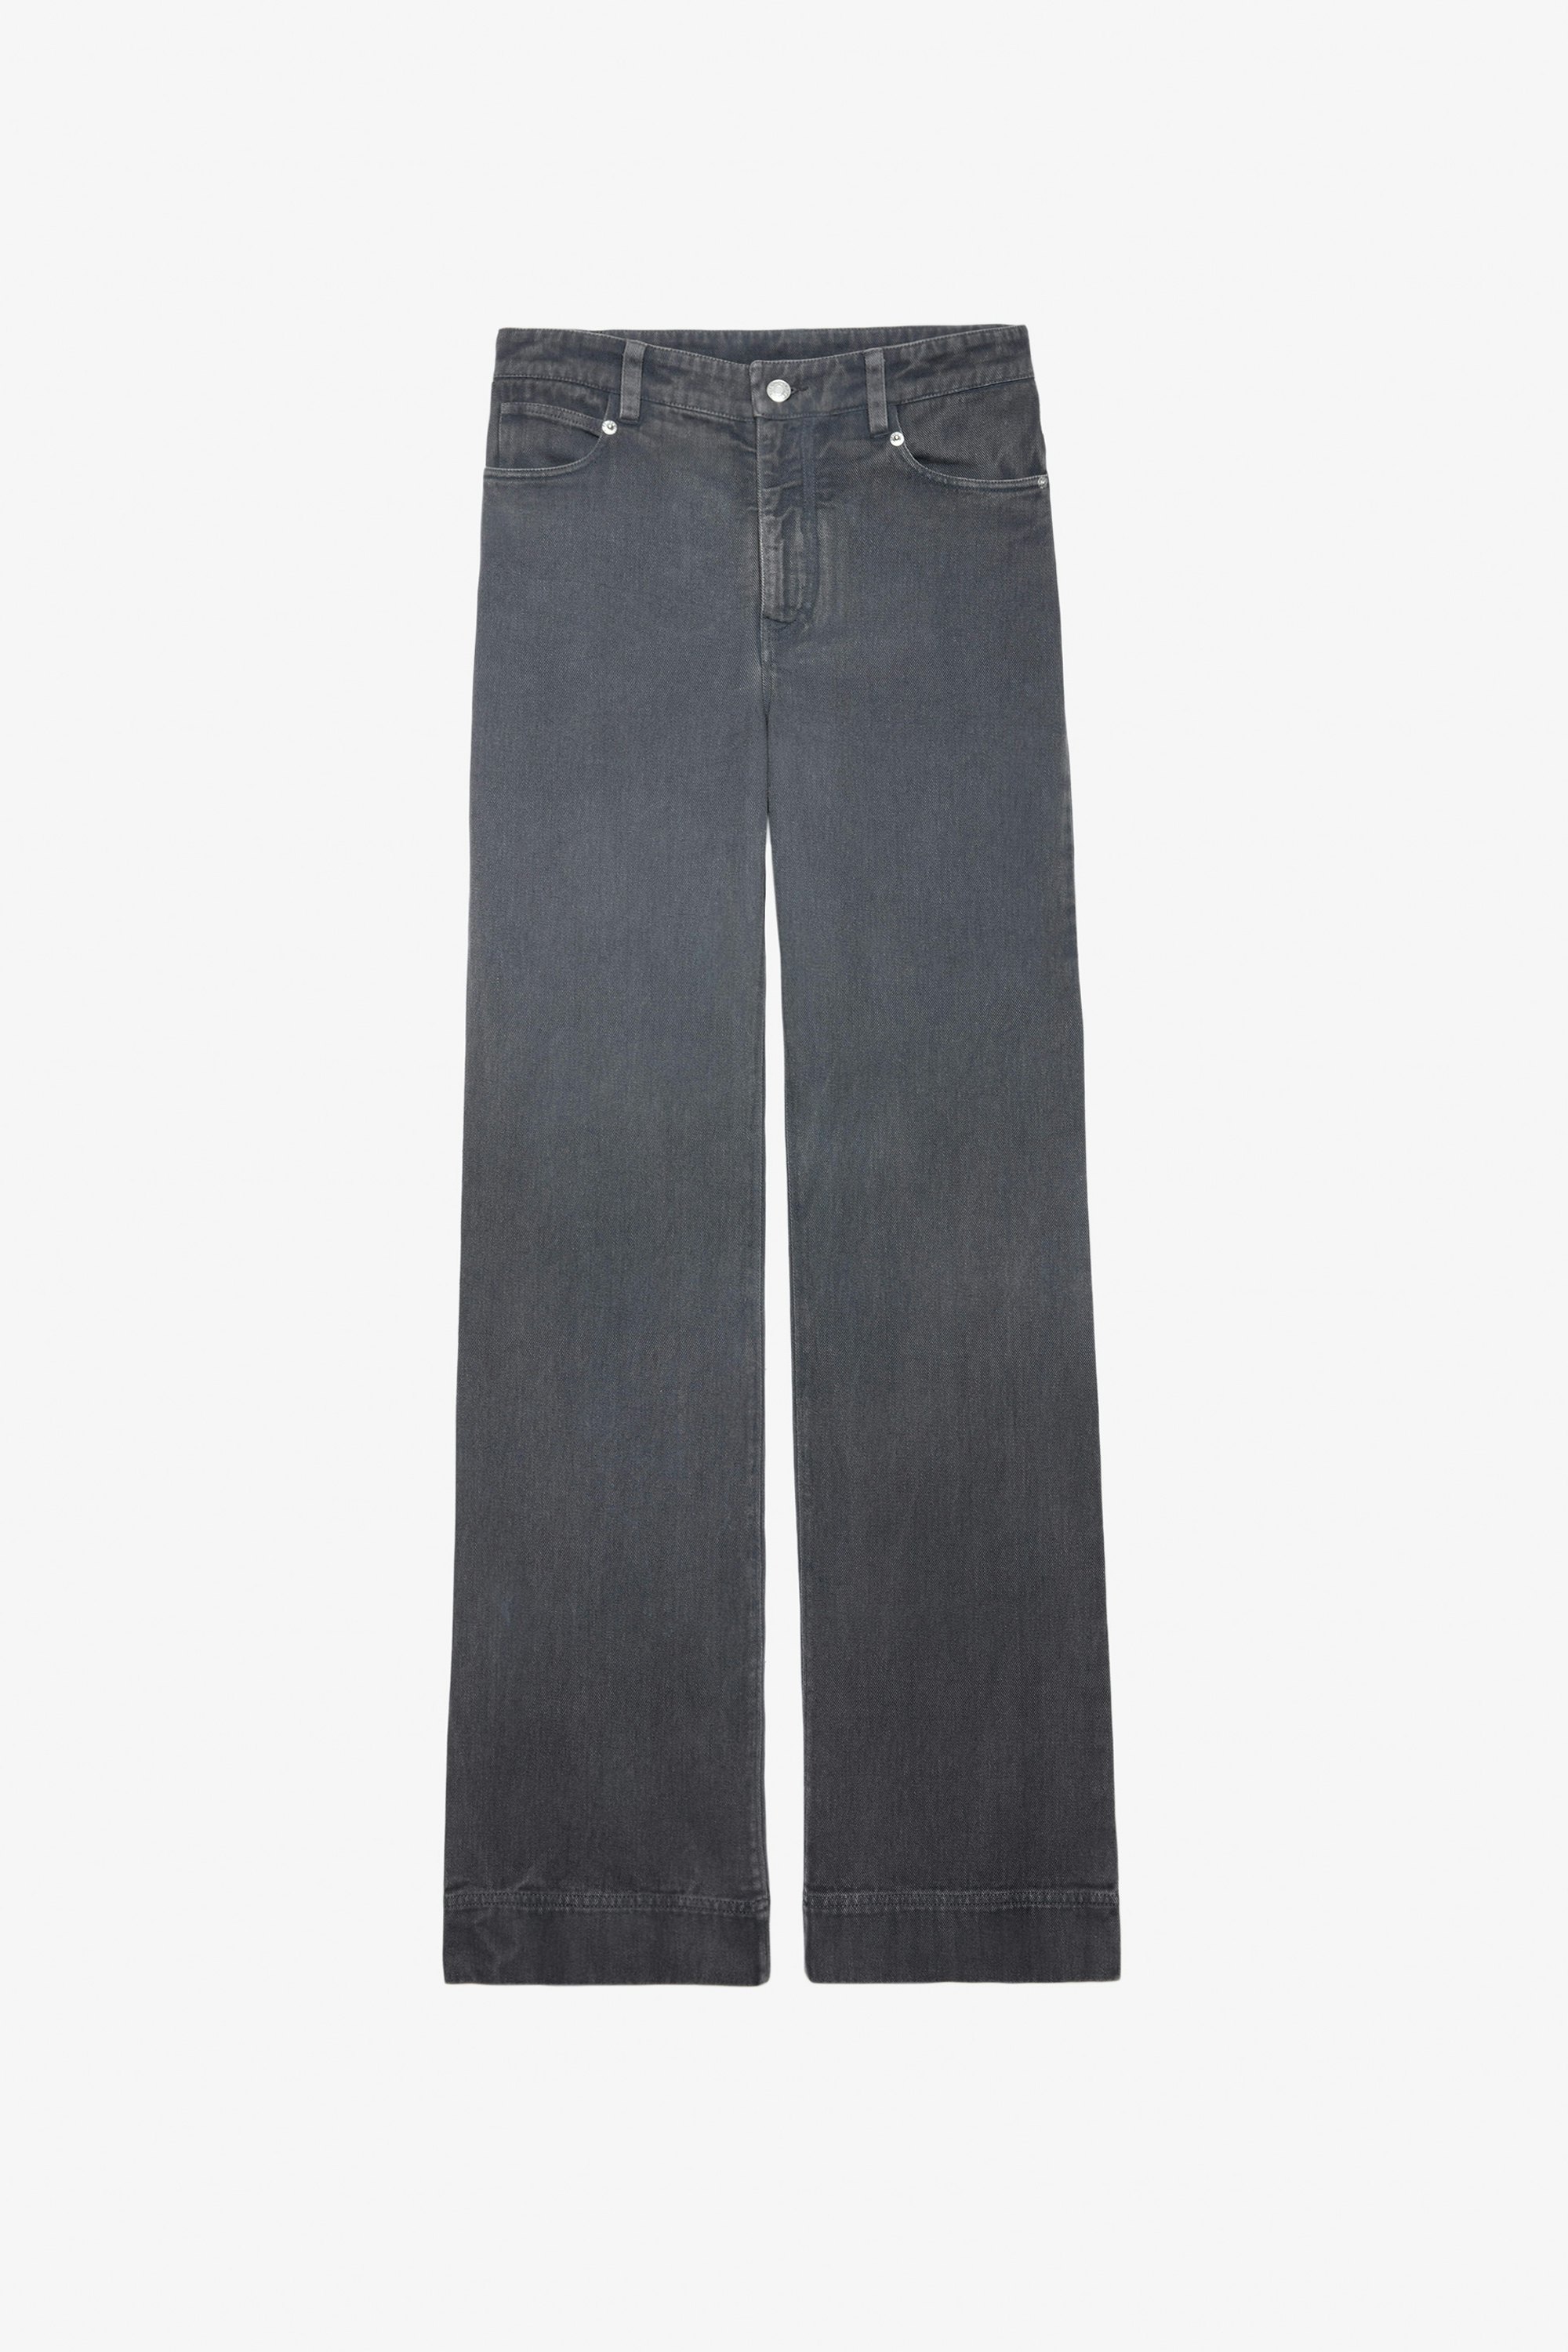 Evy Jeans - Women’s grey flared denim jeans.